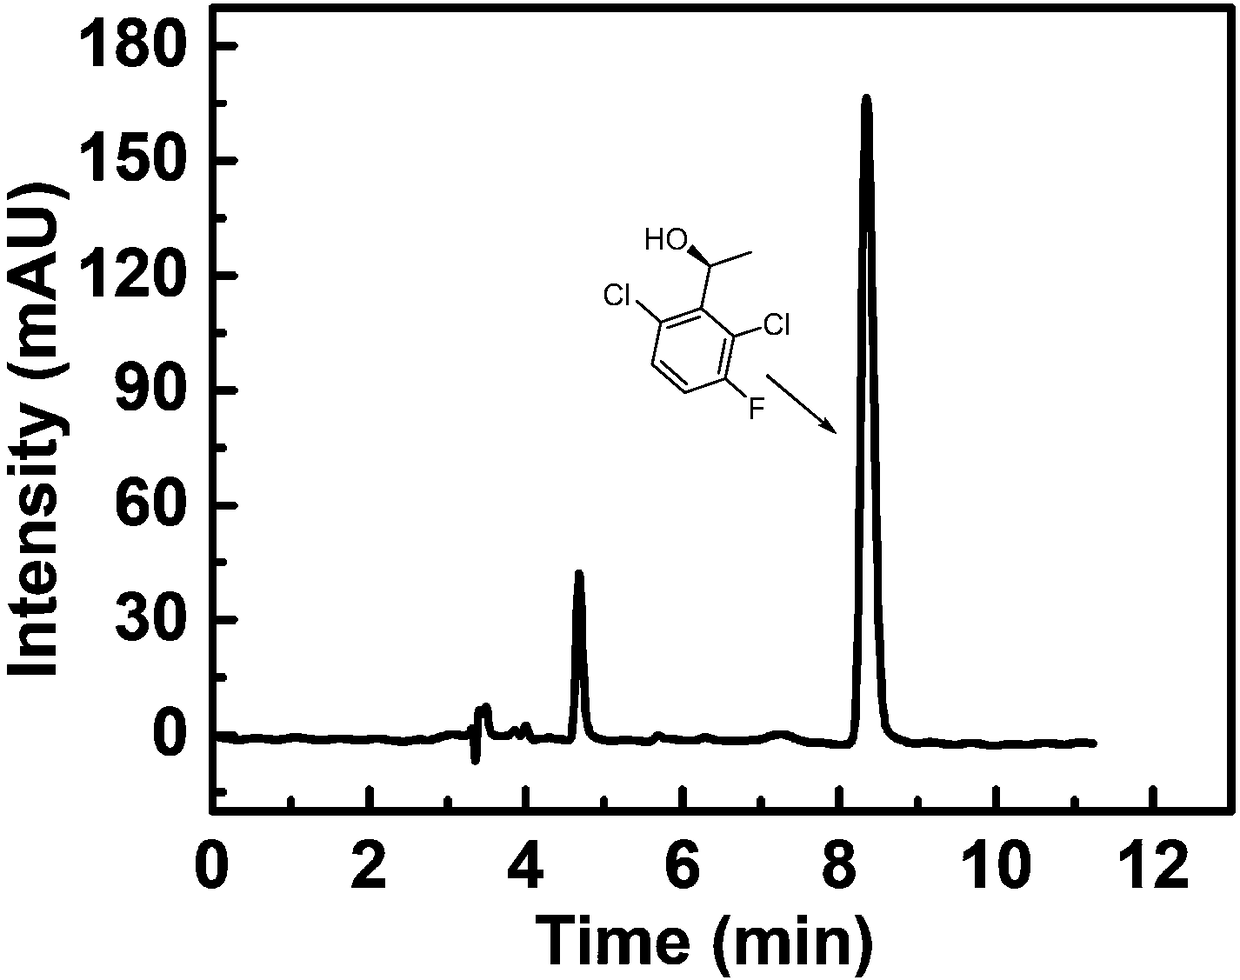 Method for synthesizing (S)-1-1(2,6-dichloro-3-fluorine-phenyl) ethanol through immobilized bienzyme catalysis